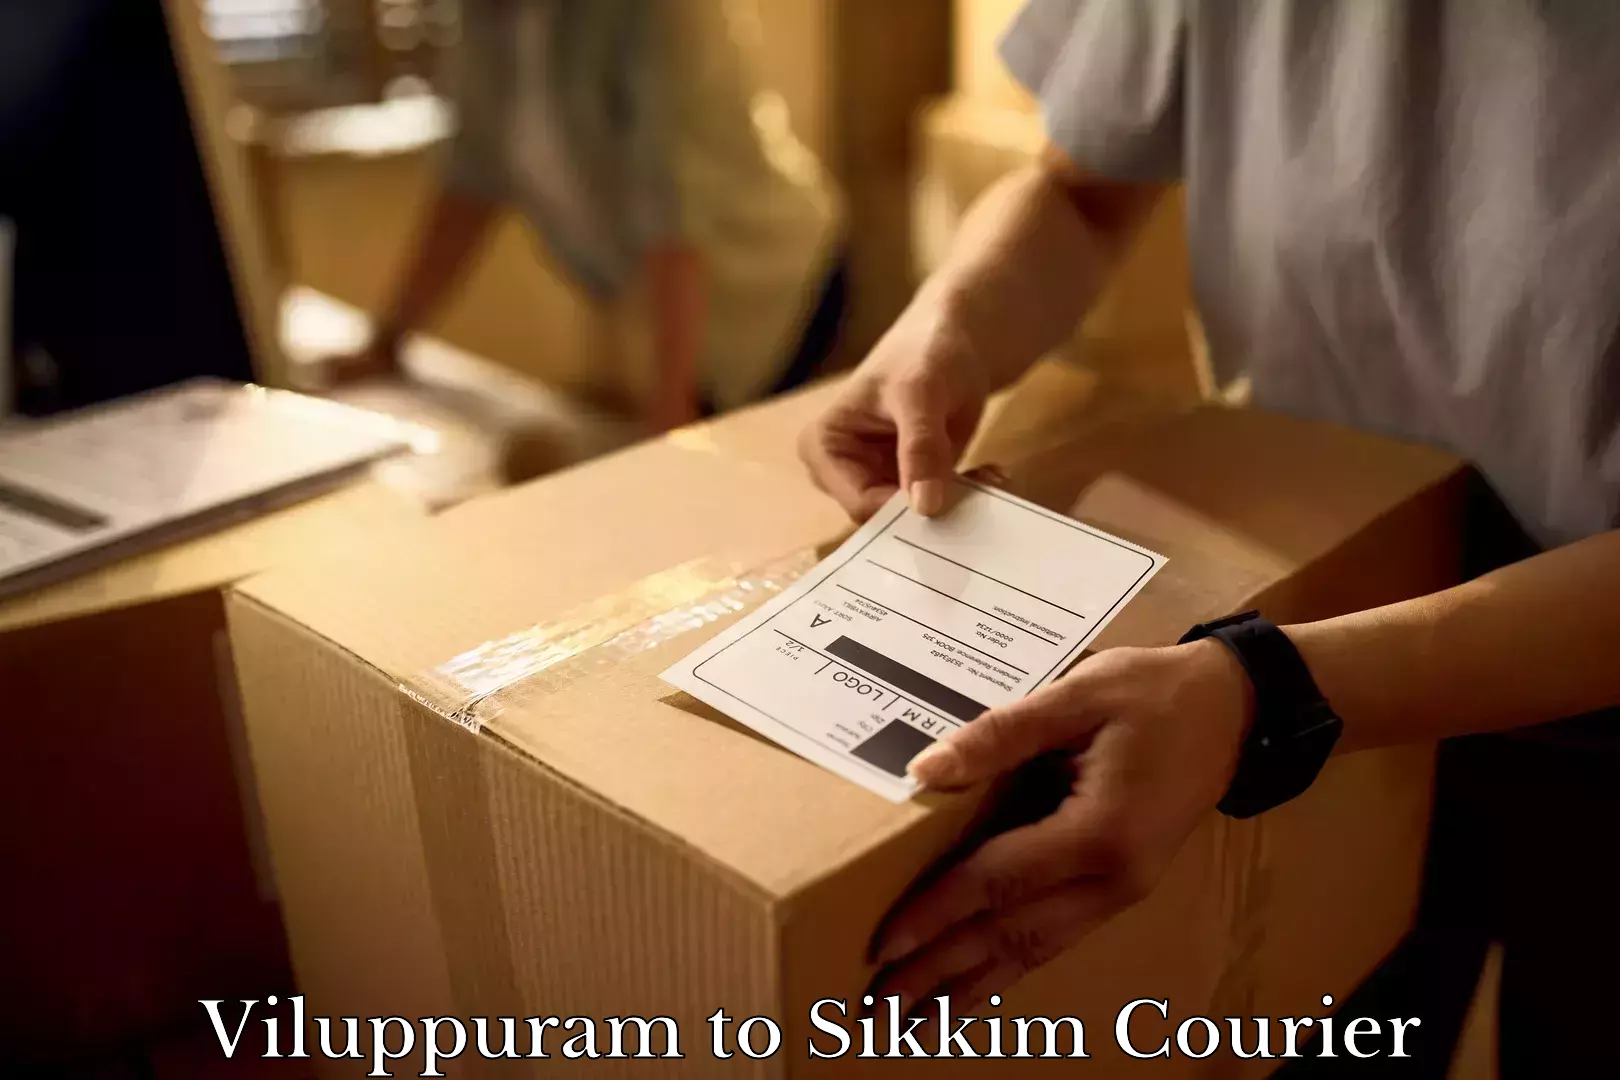 Furniture delivery service Viluppuram to Geyzing